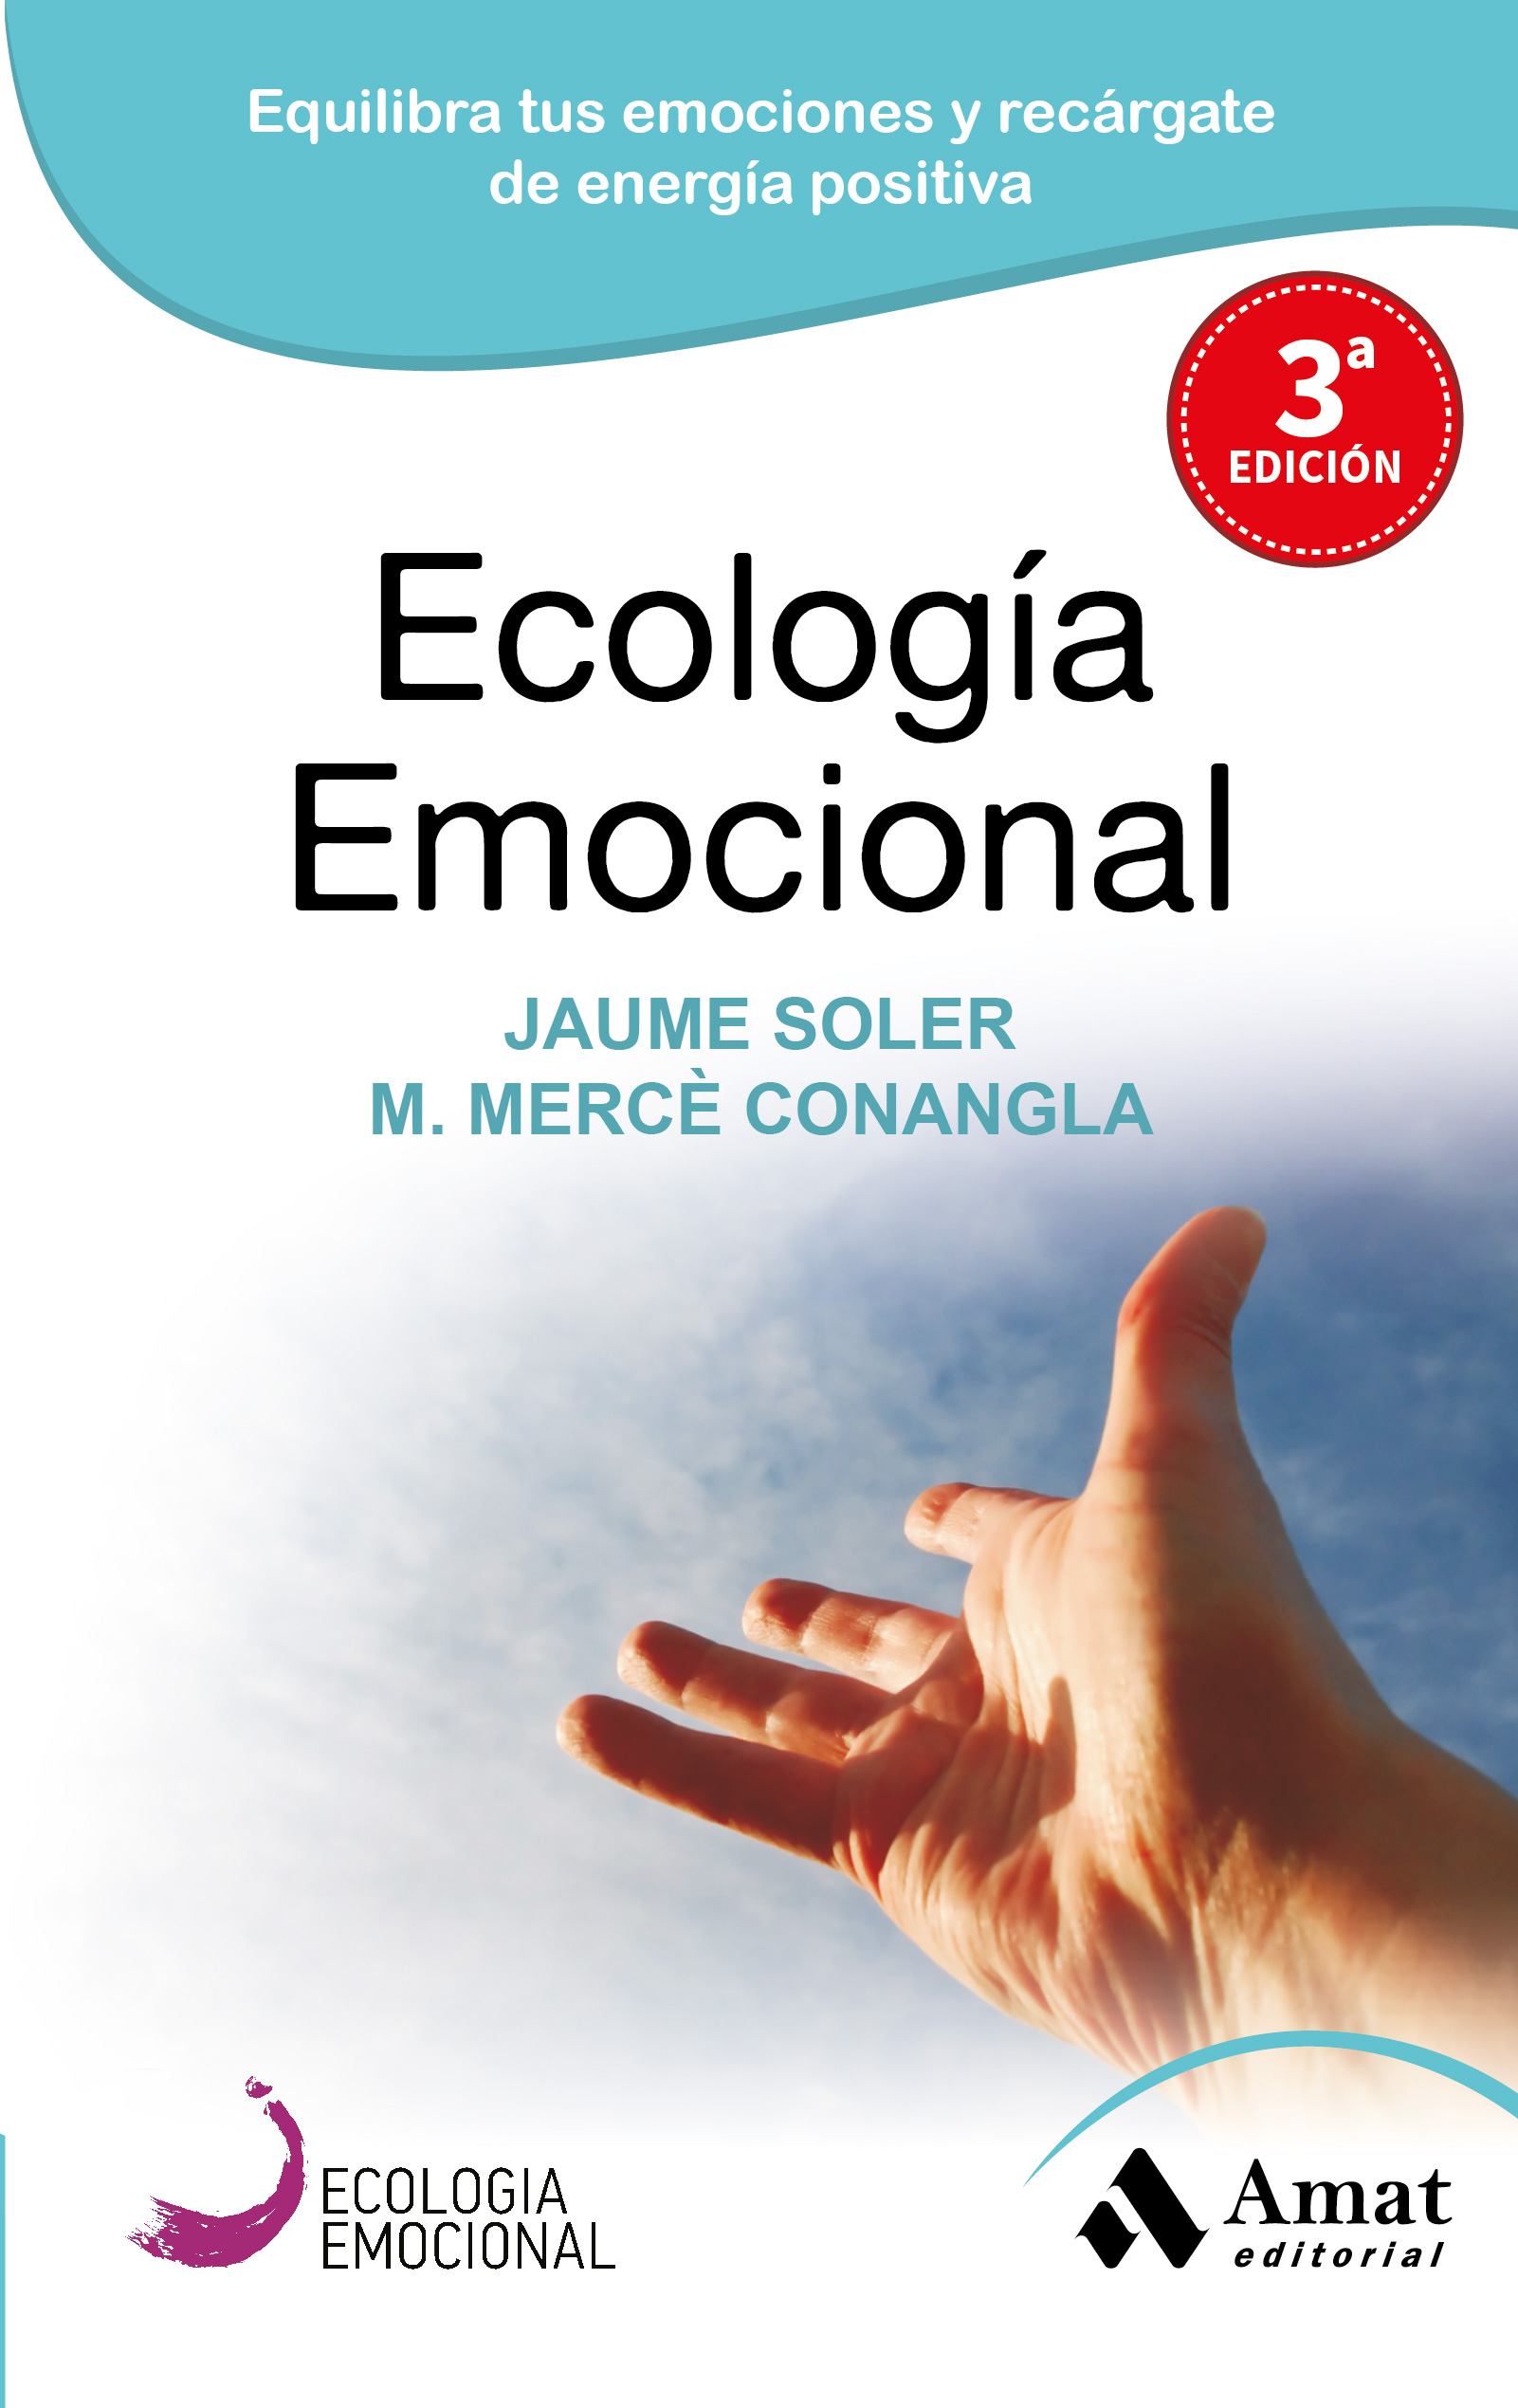 Ecología emocional | M. Mercè Conangla | Libros para vivir mejor